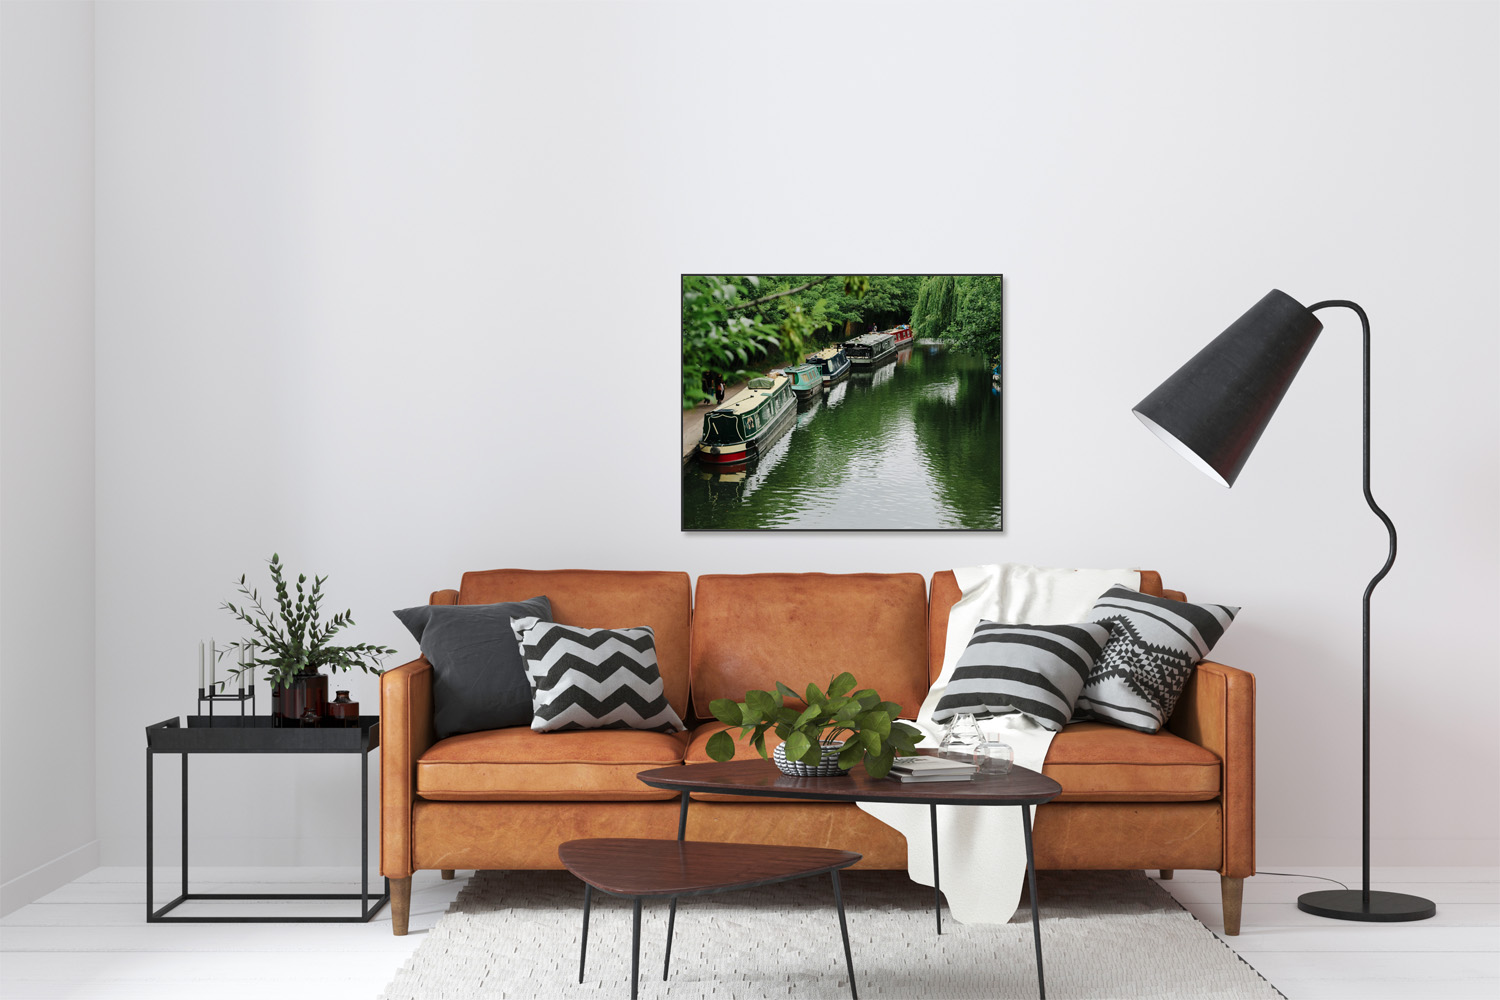 camden house boats gallery art | printable wall art via Finding Beautiful Truth